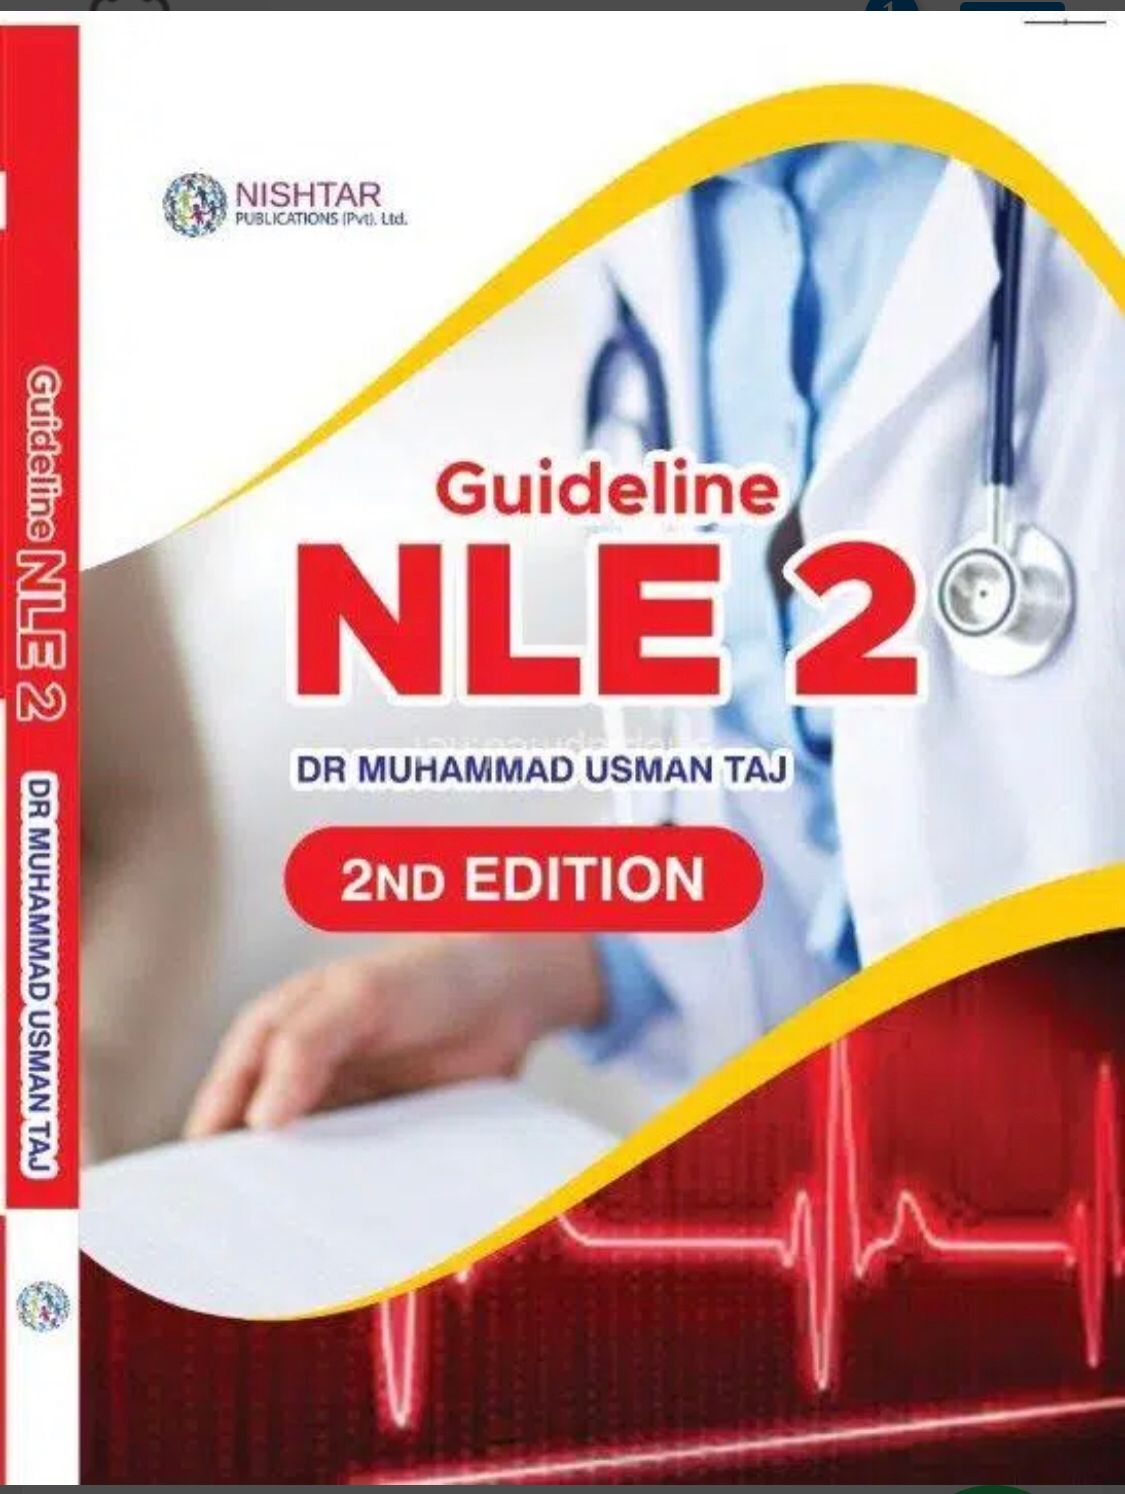 Guideline NLE 2: 2nd Edition by Dr. Muhammad Usman Taj PDF Free Download